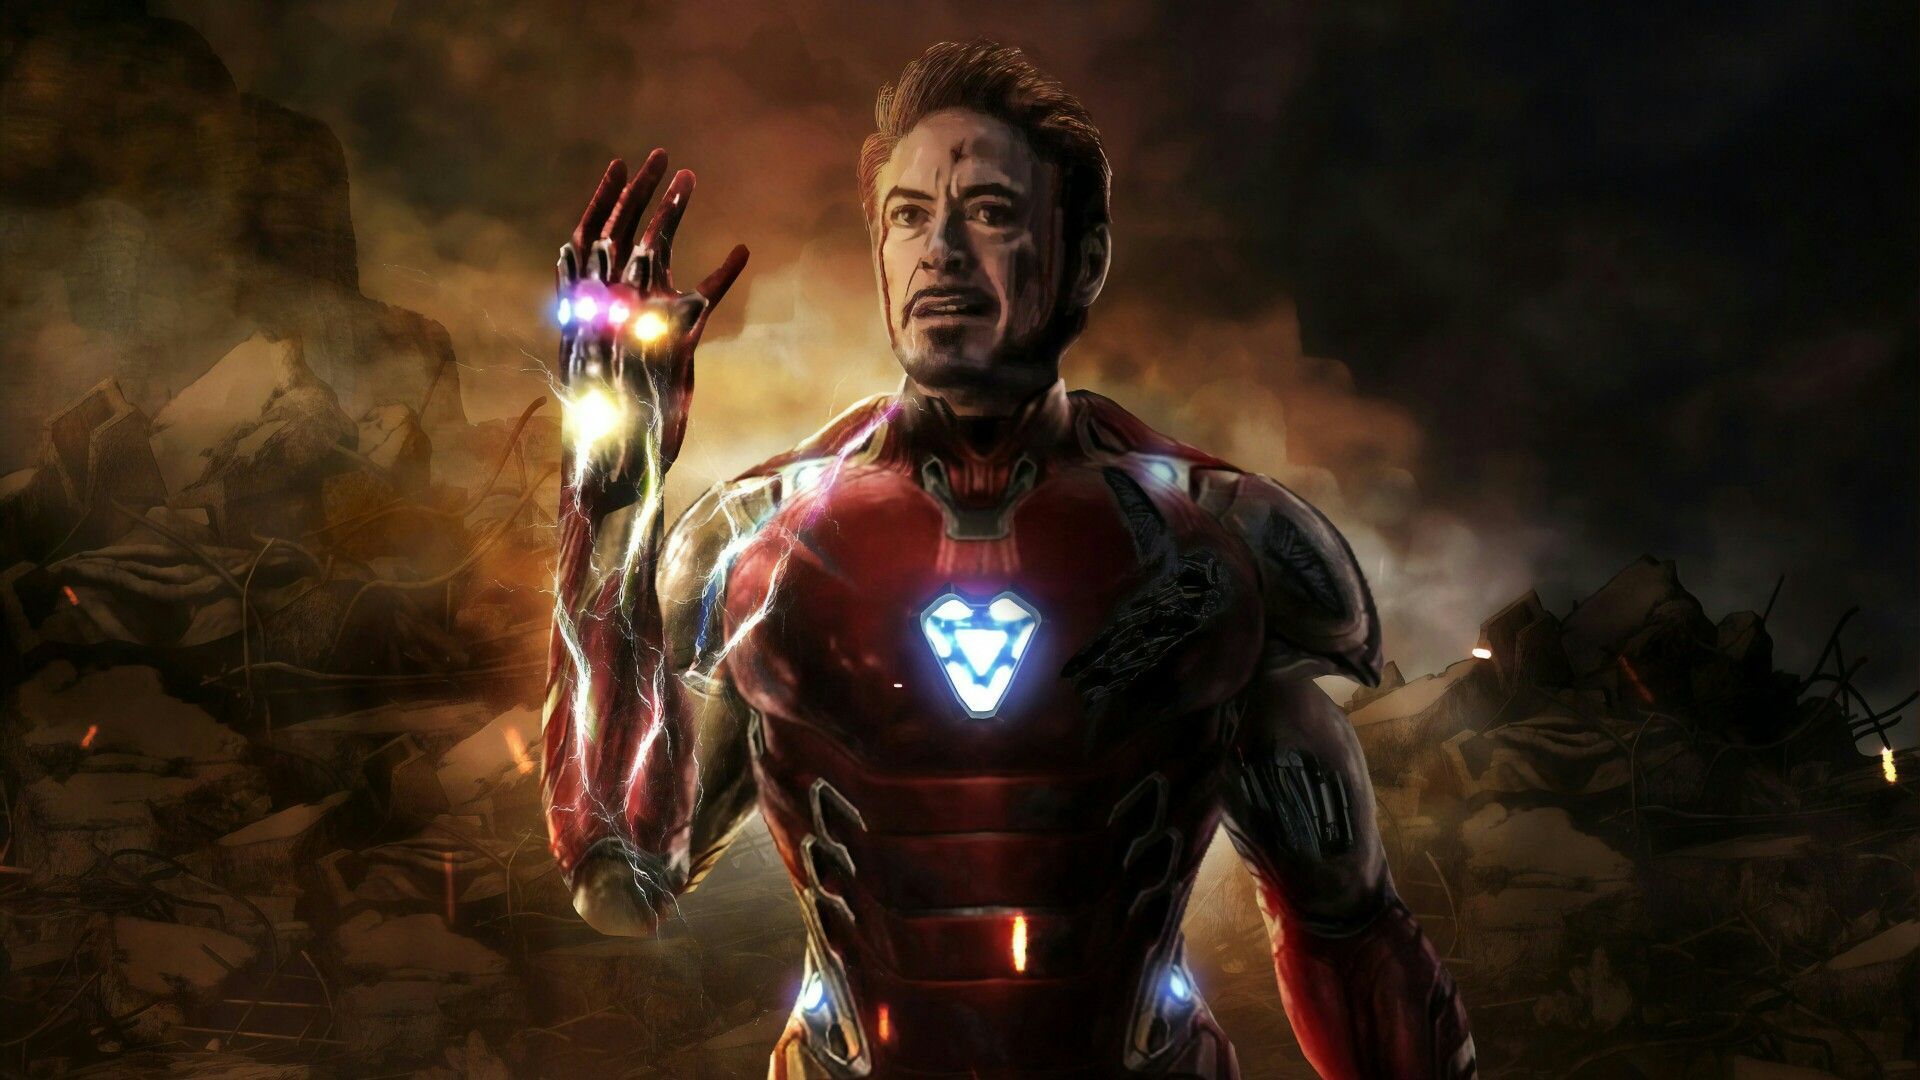 Iron man avengers, Iron man wallpaper .in.com